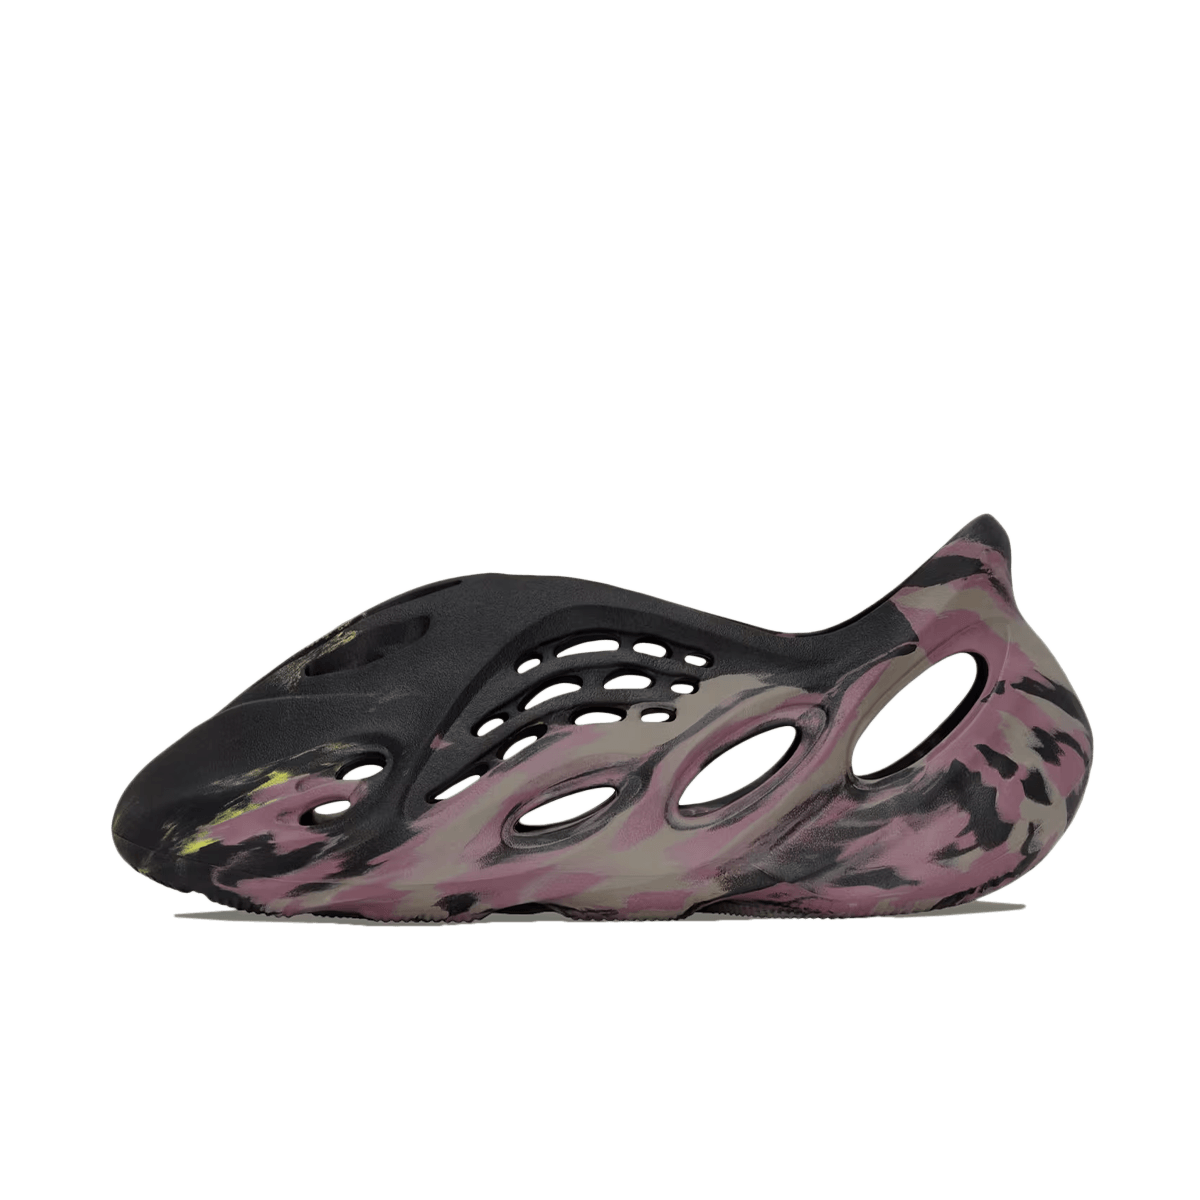 adidas Yeezy Foam Runner 'MX Carbon'